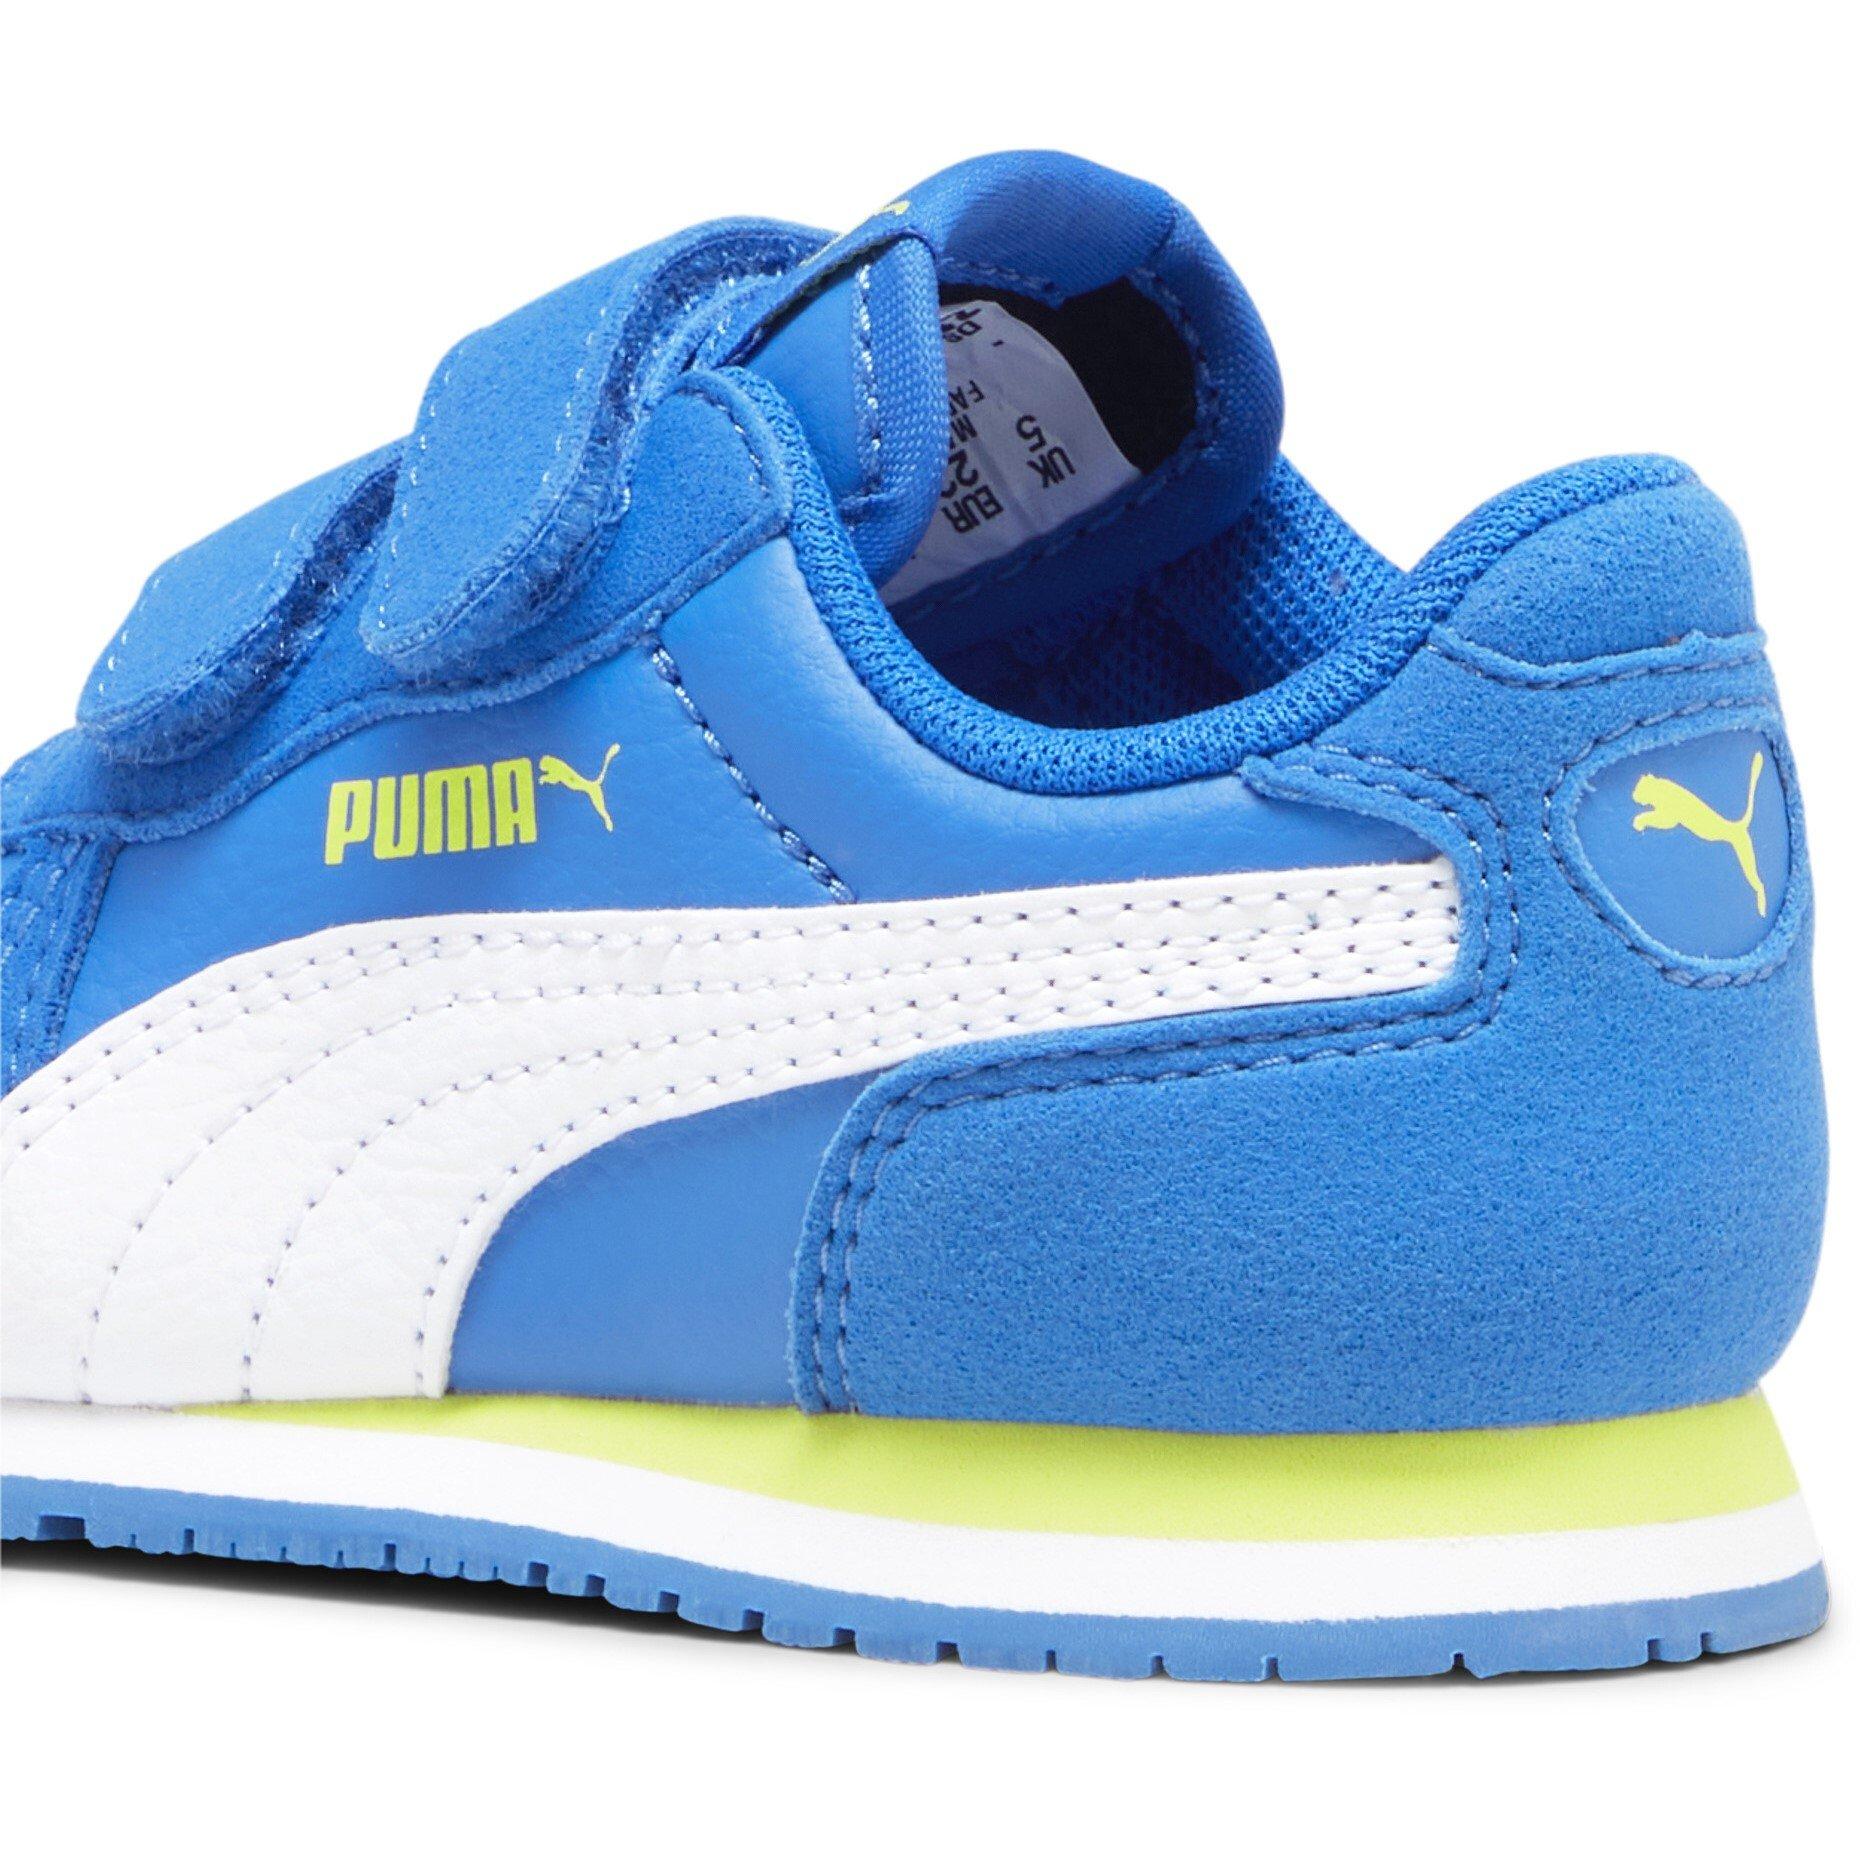 | 20 Sports Puma Infants | V Shoes MY | Runners Racer Cabana Direct SL